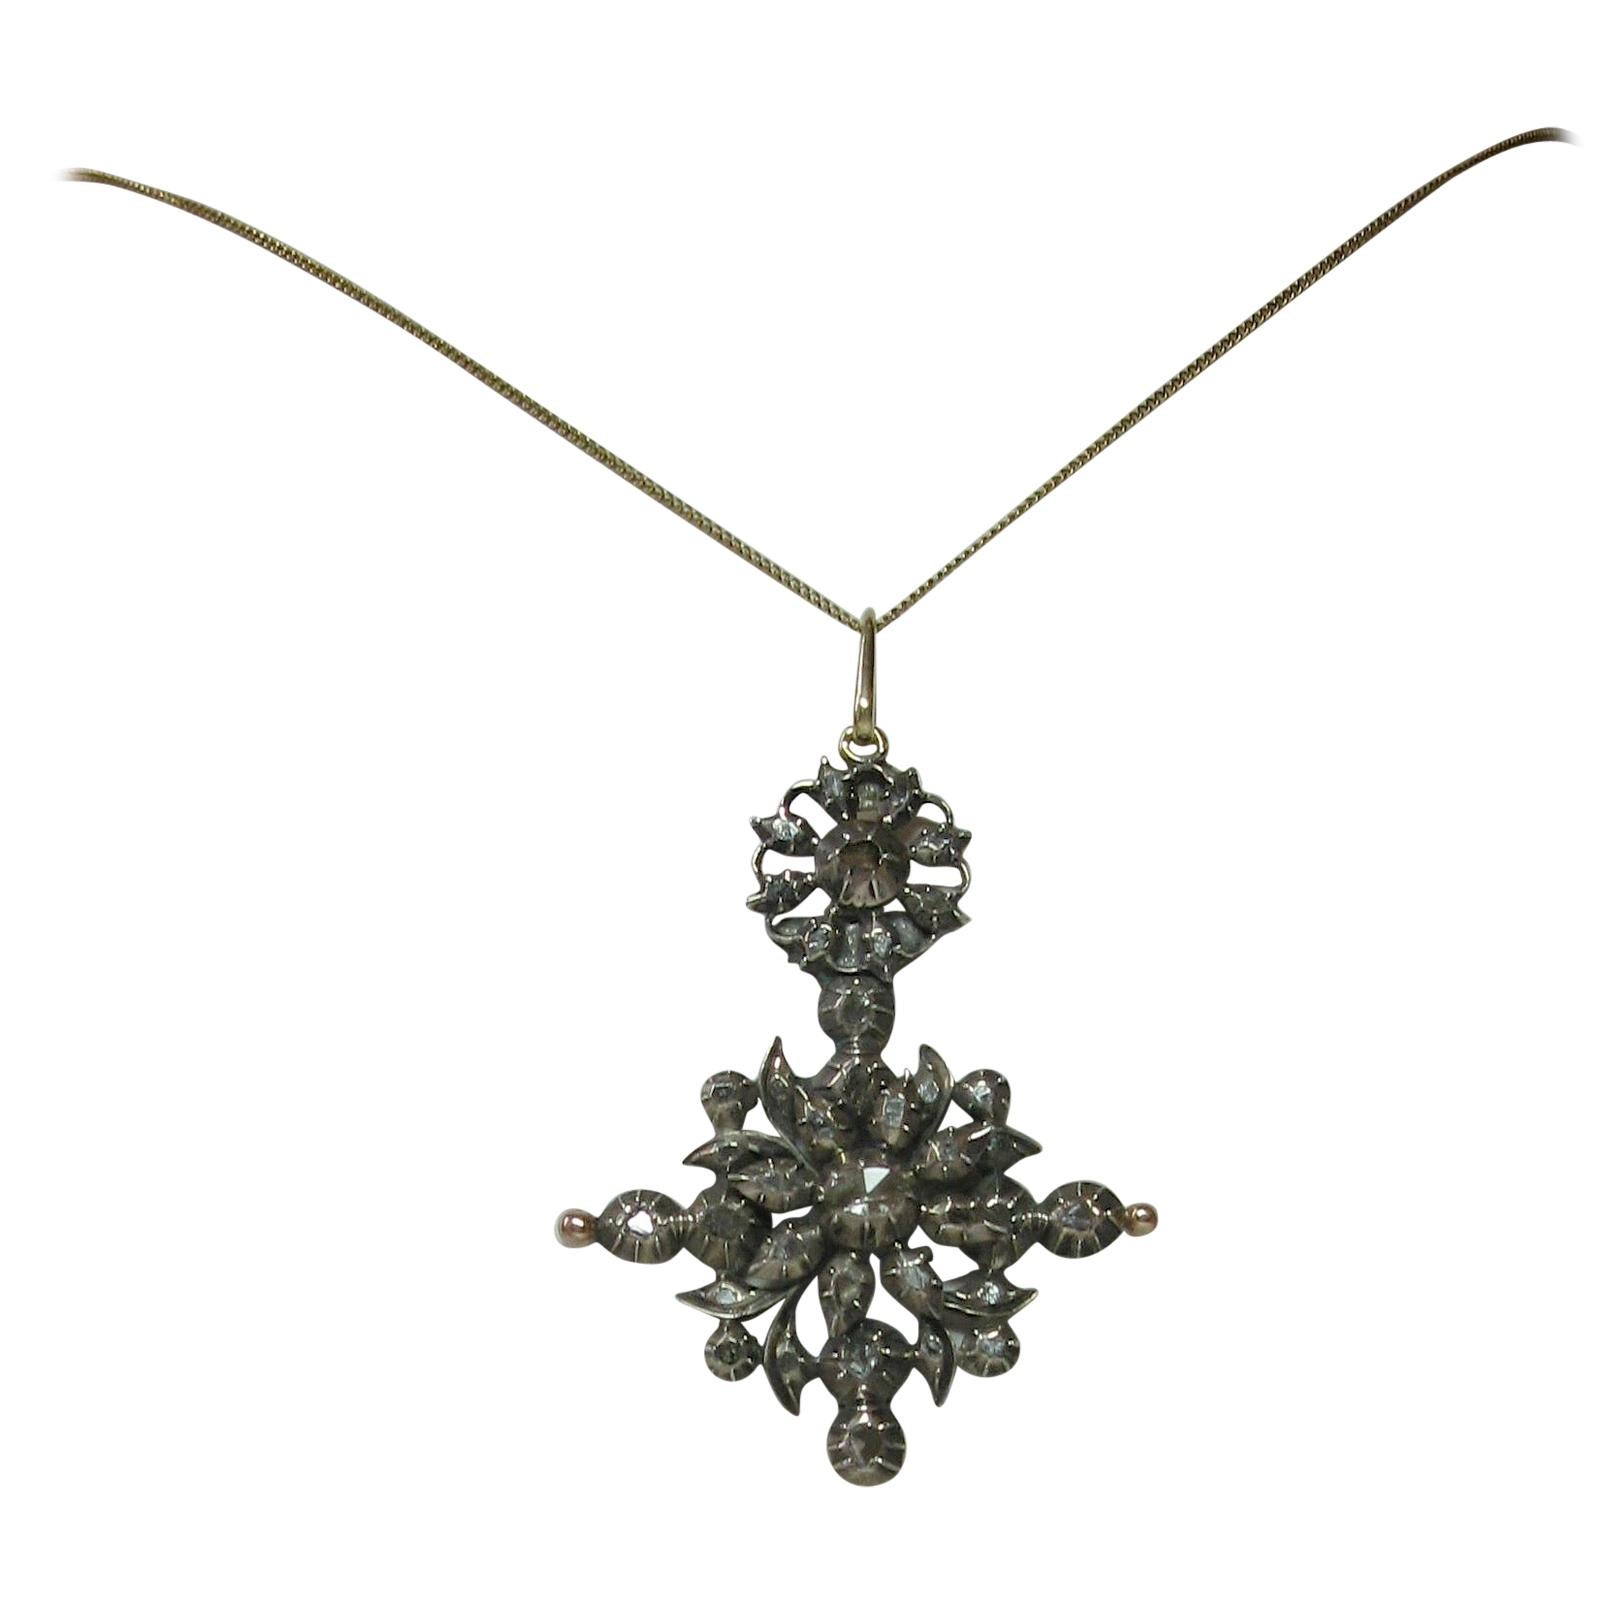 Rare collier néerlandais en or 14 carats avec pendentif en diamant taille rose de style géorgien, circa 1700